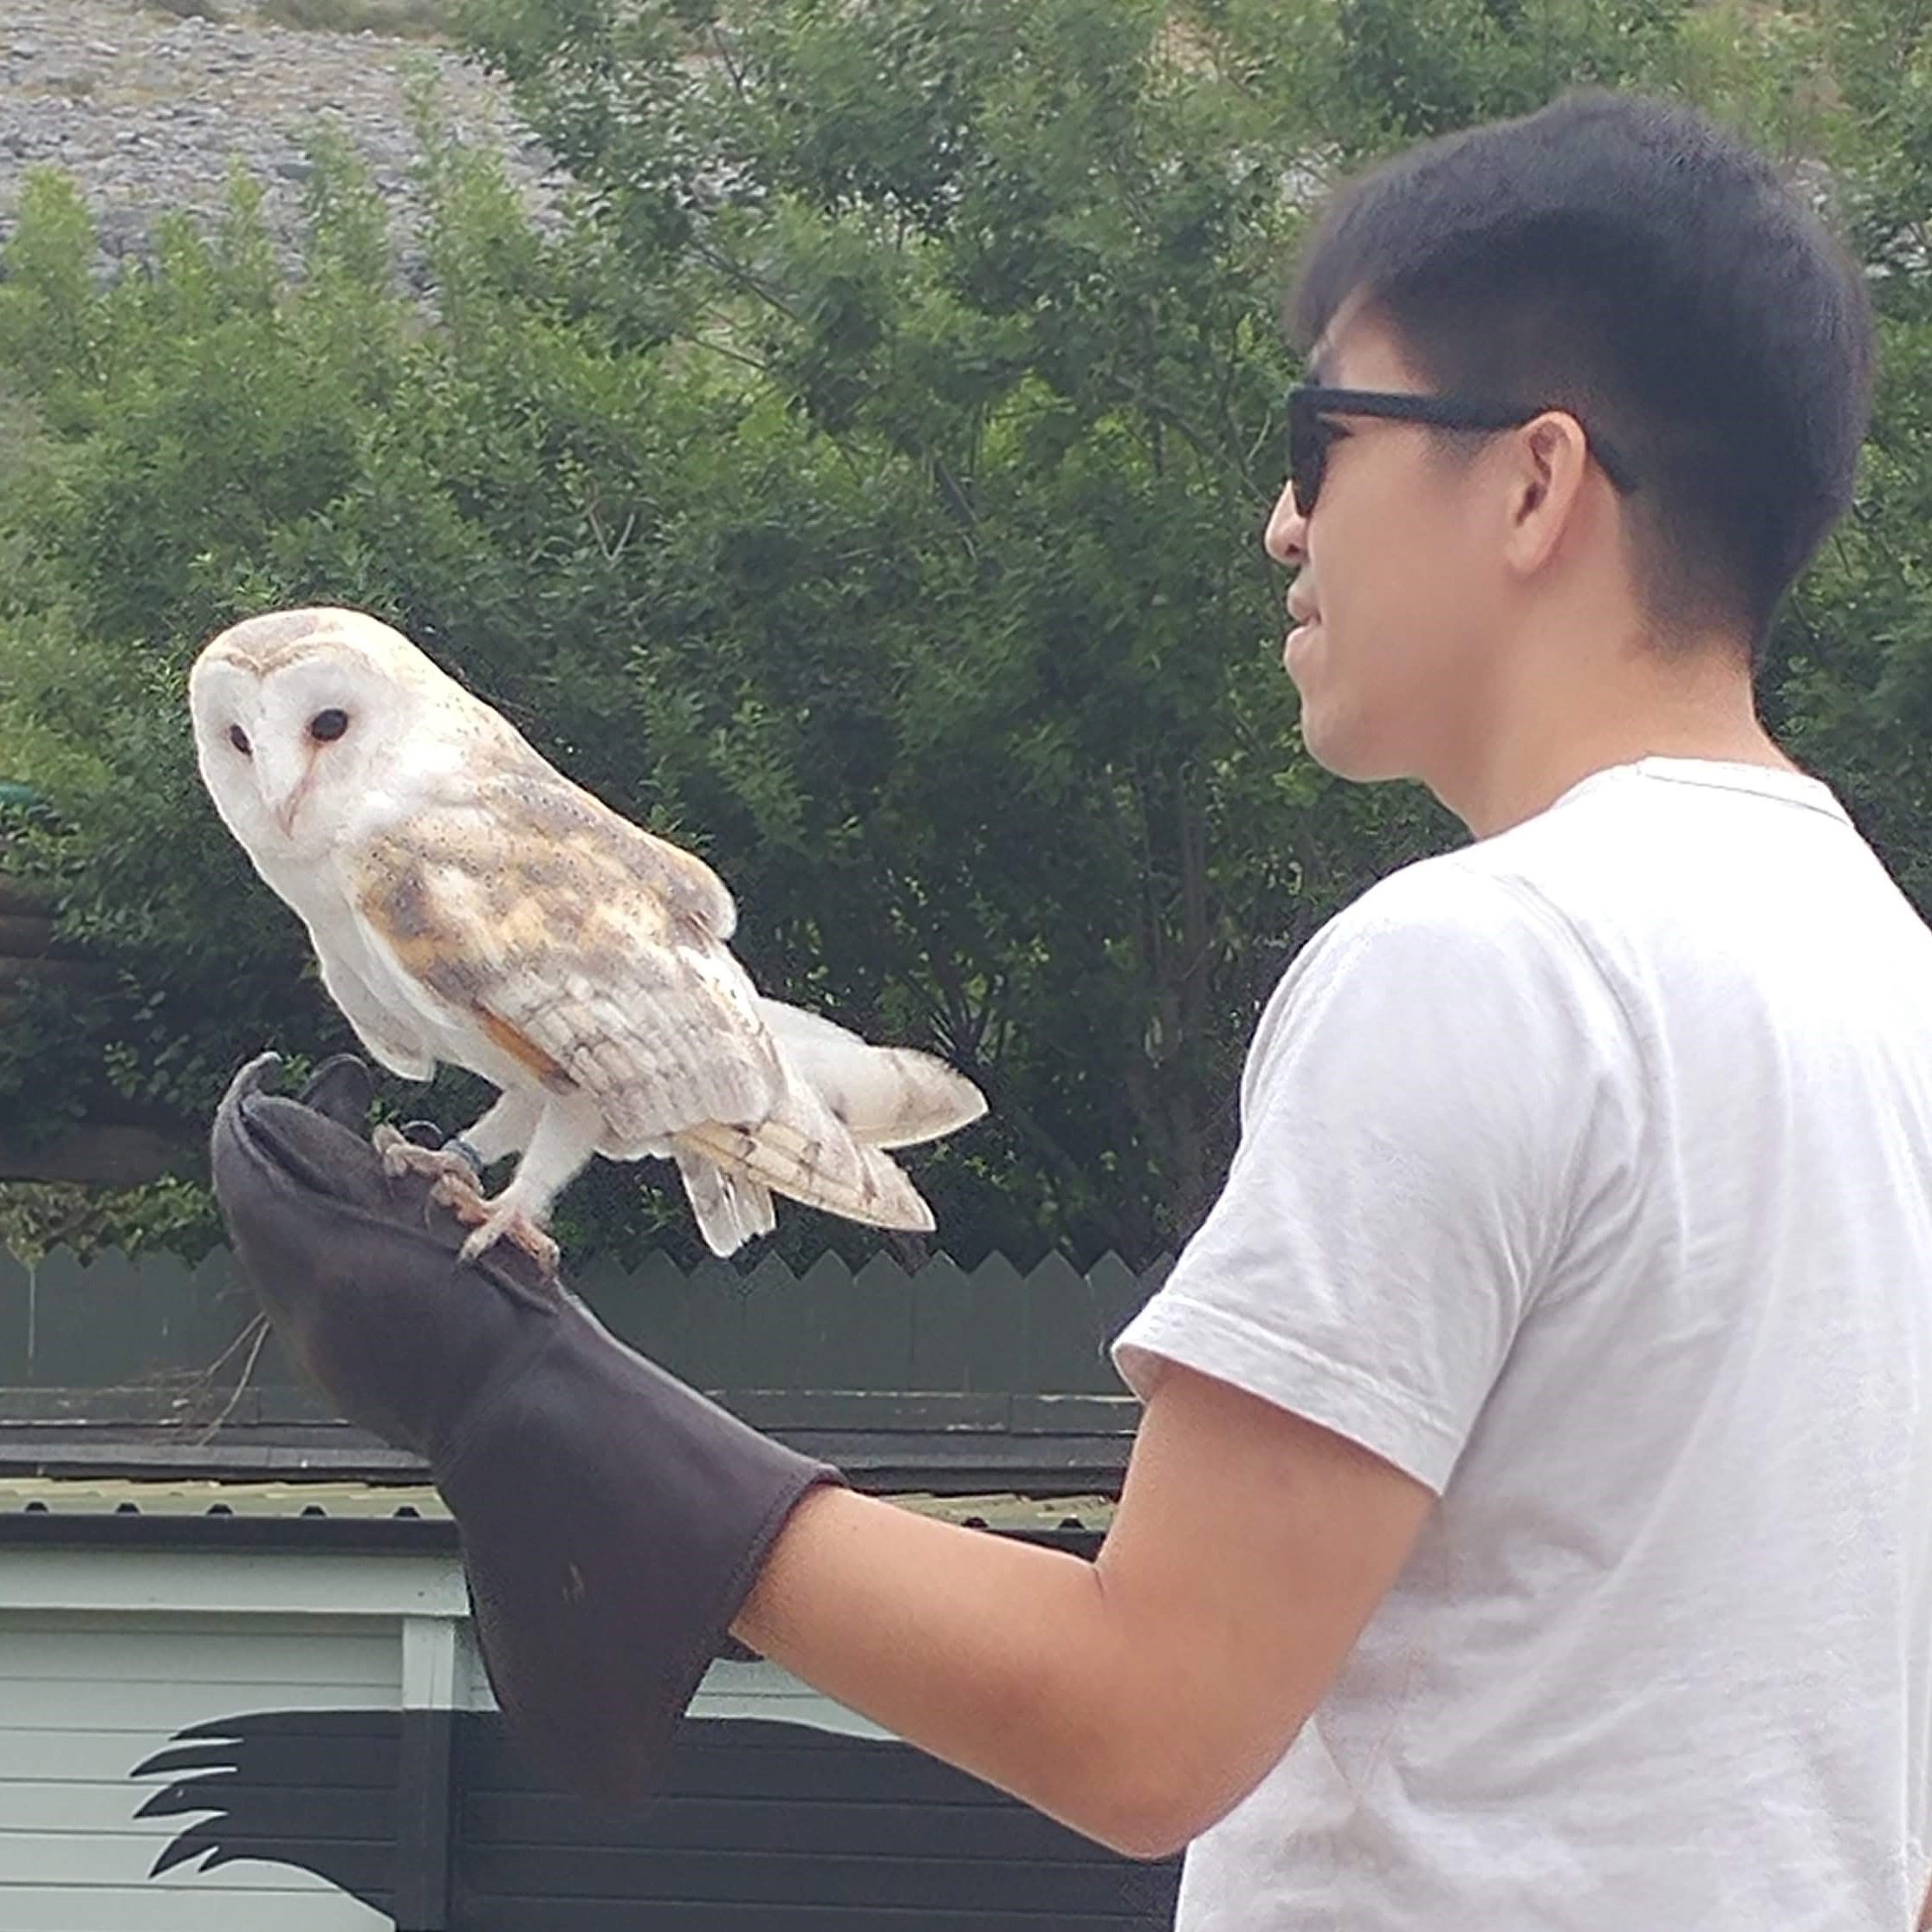 Me holding a barn owl